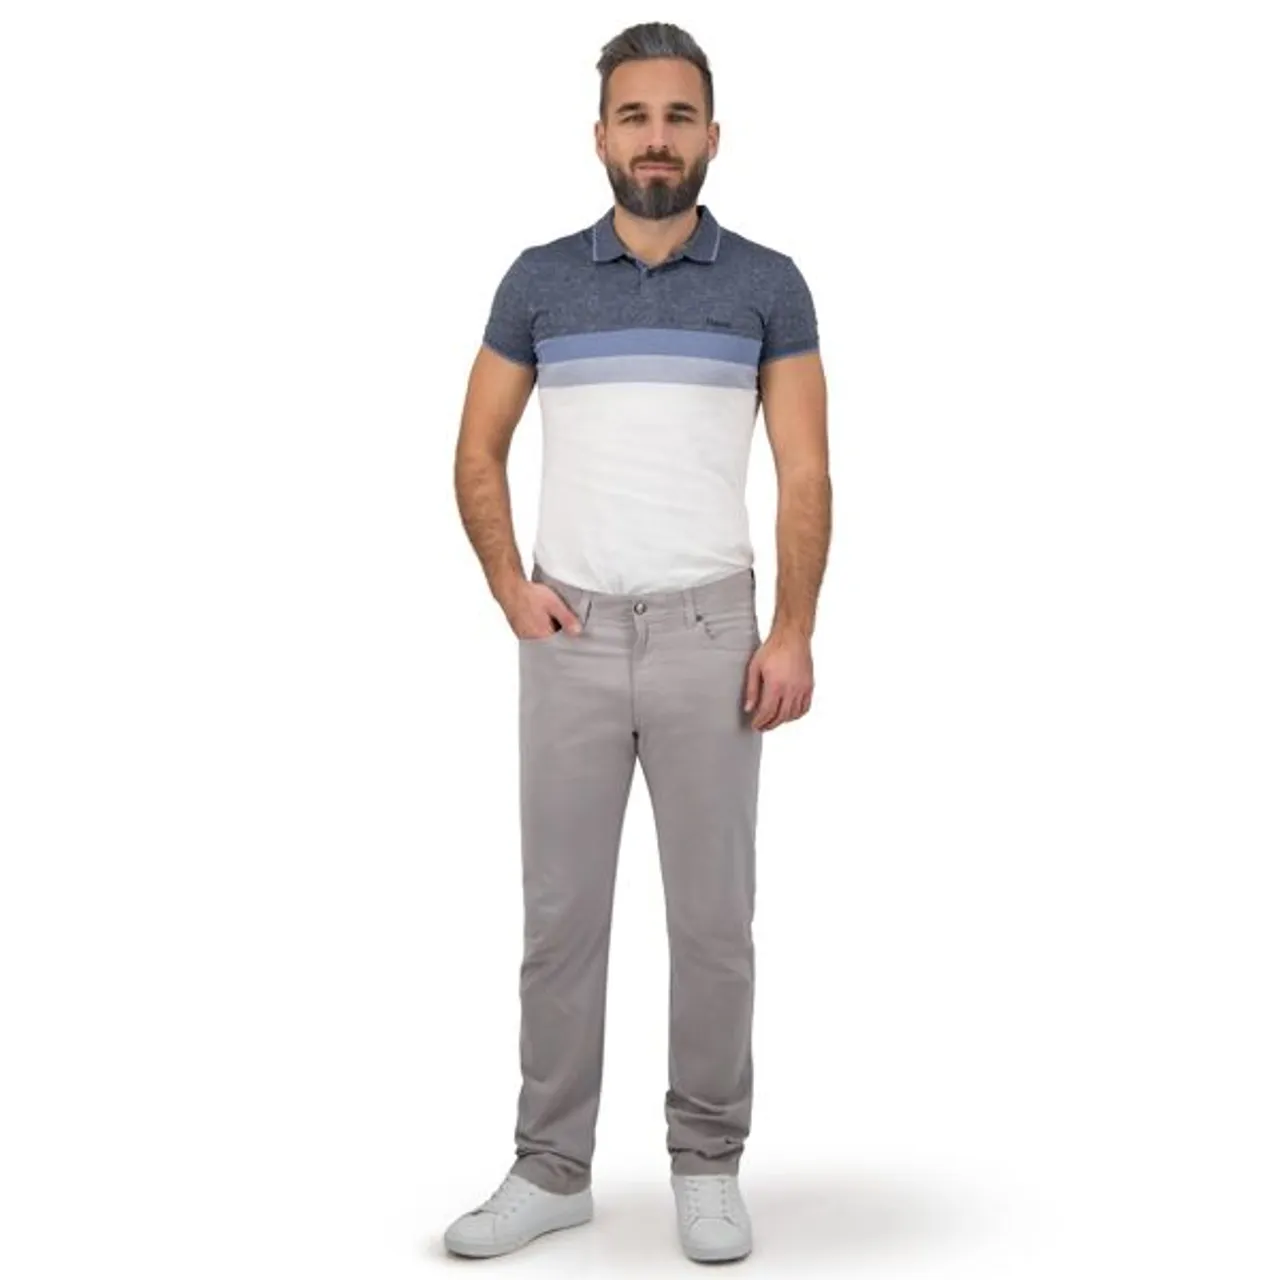 Bequeme Jeans BRÜHL "Genua III" Gr. 54, EURO-Größen, grau (hellgrau) Herren Jeans 5-Pocket-Jeans Stretchjeans Stretch